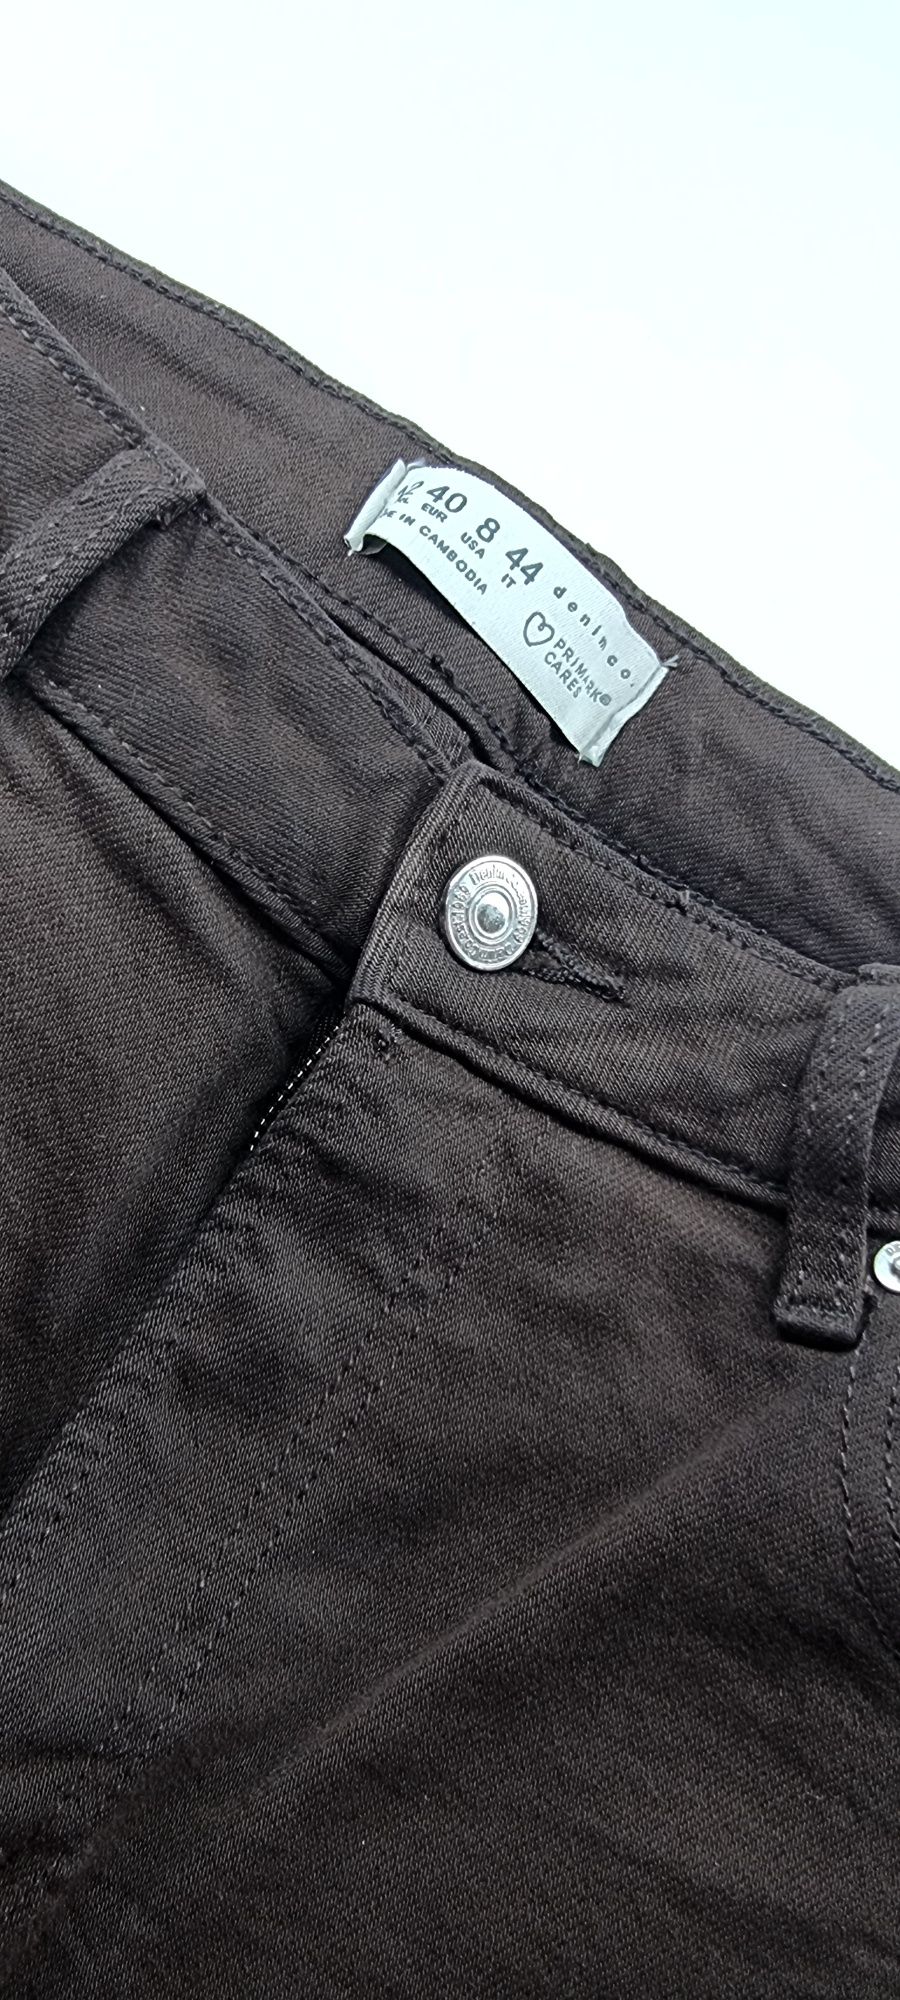 Spodnie jeansy Primark